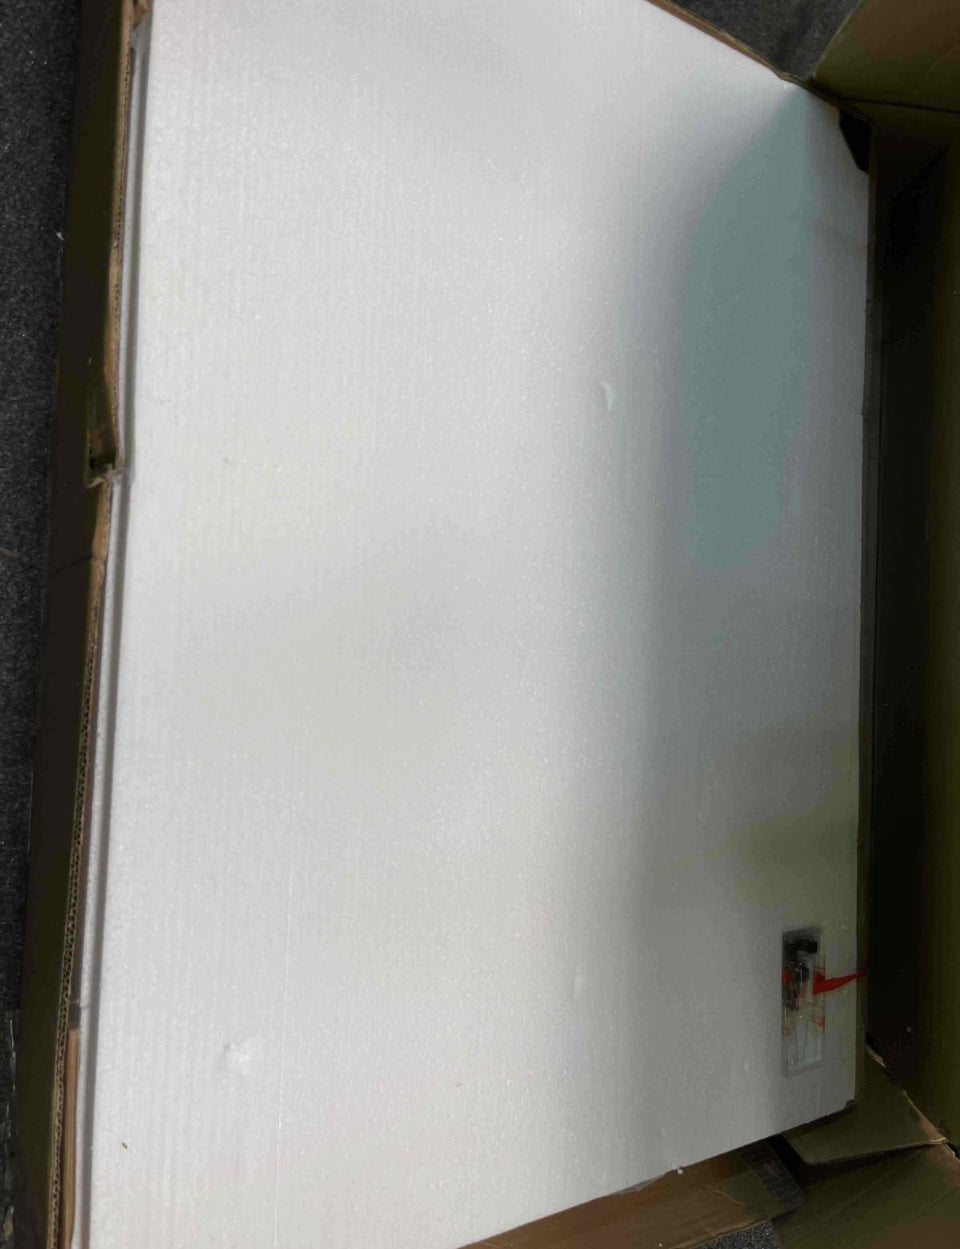 TEHOME Farmhouse Matt Black Recessed Bathroom Medicine Cabinet with Mirror Rounded Rectangle Metal Framed Medicine Cabinet with Beveled Mirror 24x36" - Selzalot